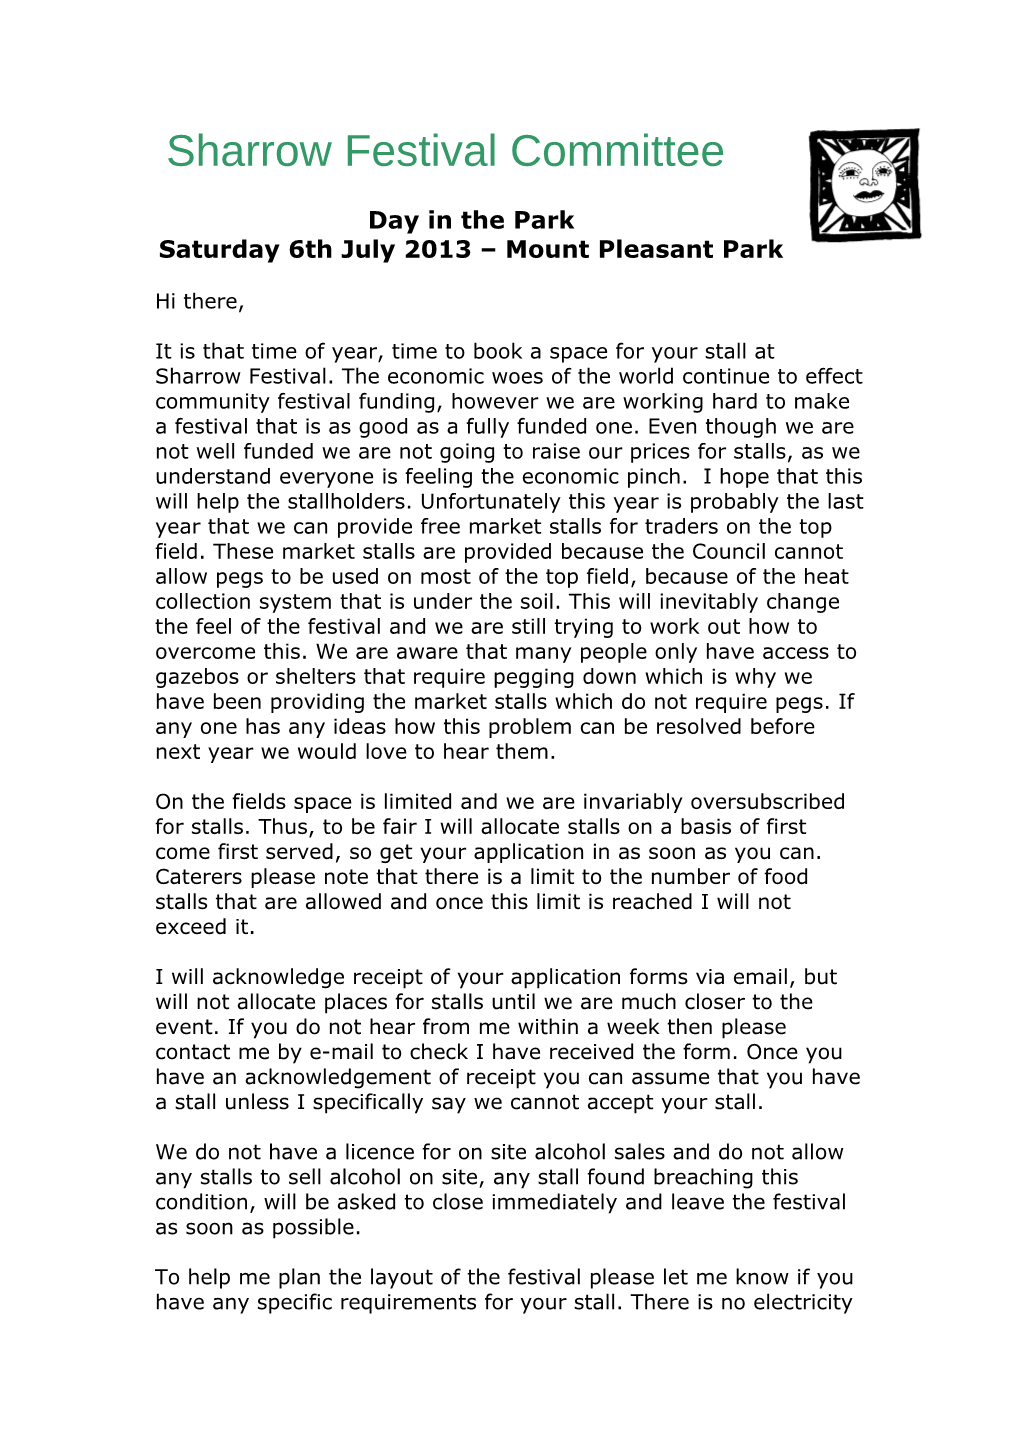 Saturday 6Th July 2013 Mount Pleasant Park